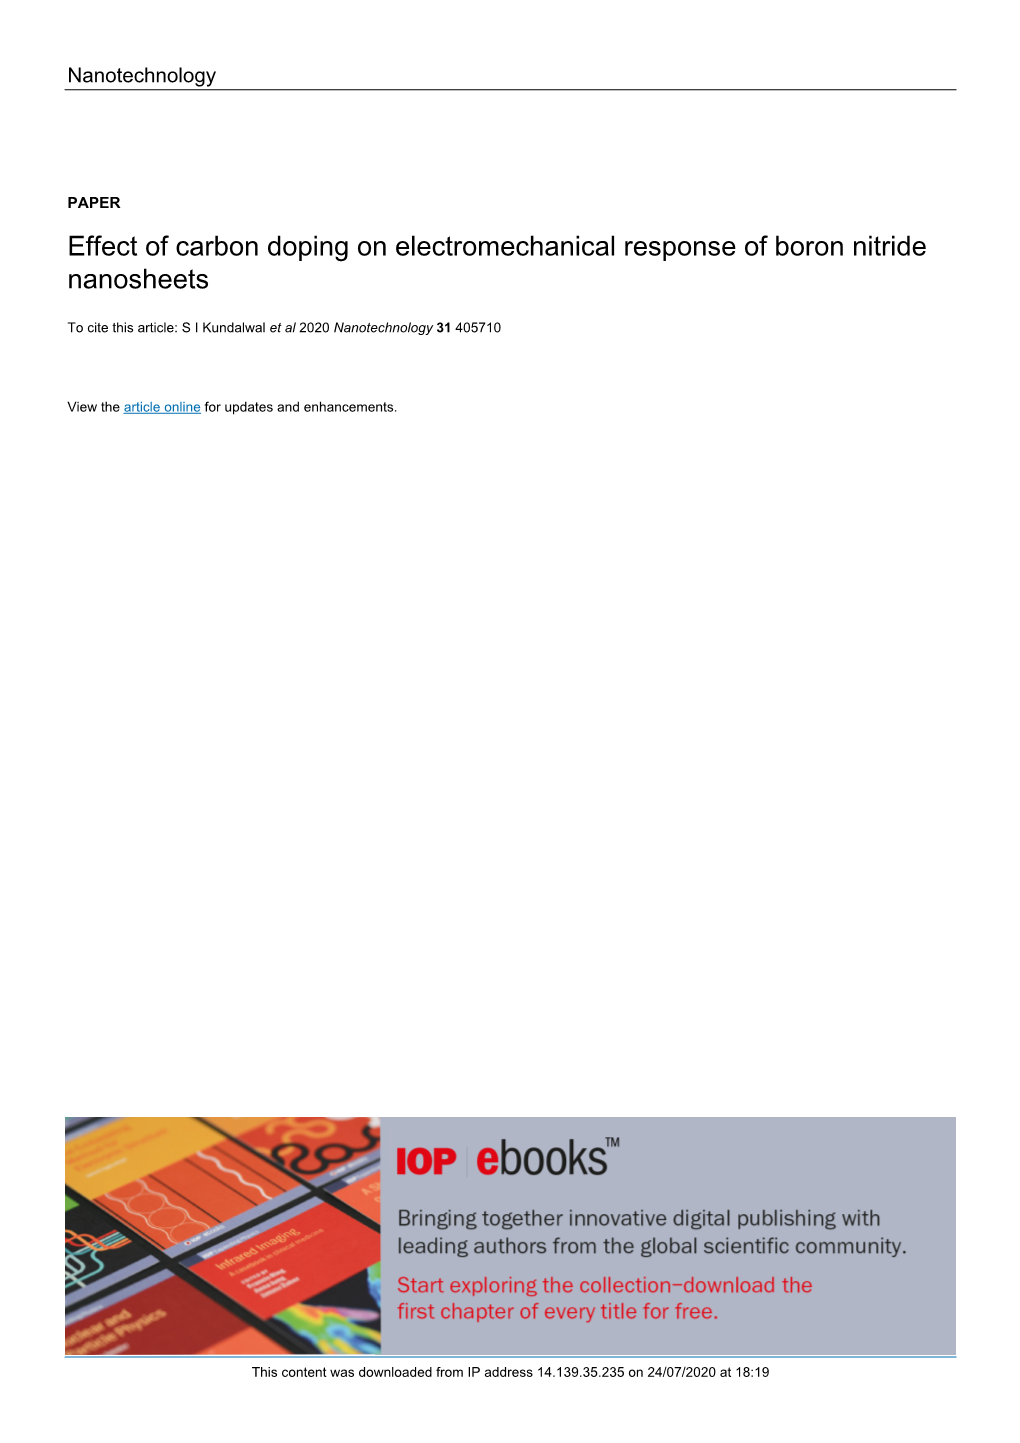 Effect of Carbon Doping on Electromechanical Response of Boron Nitride Nanosheets